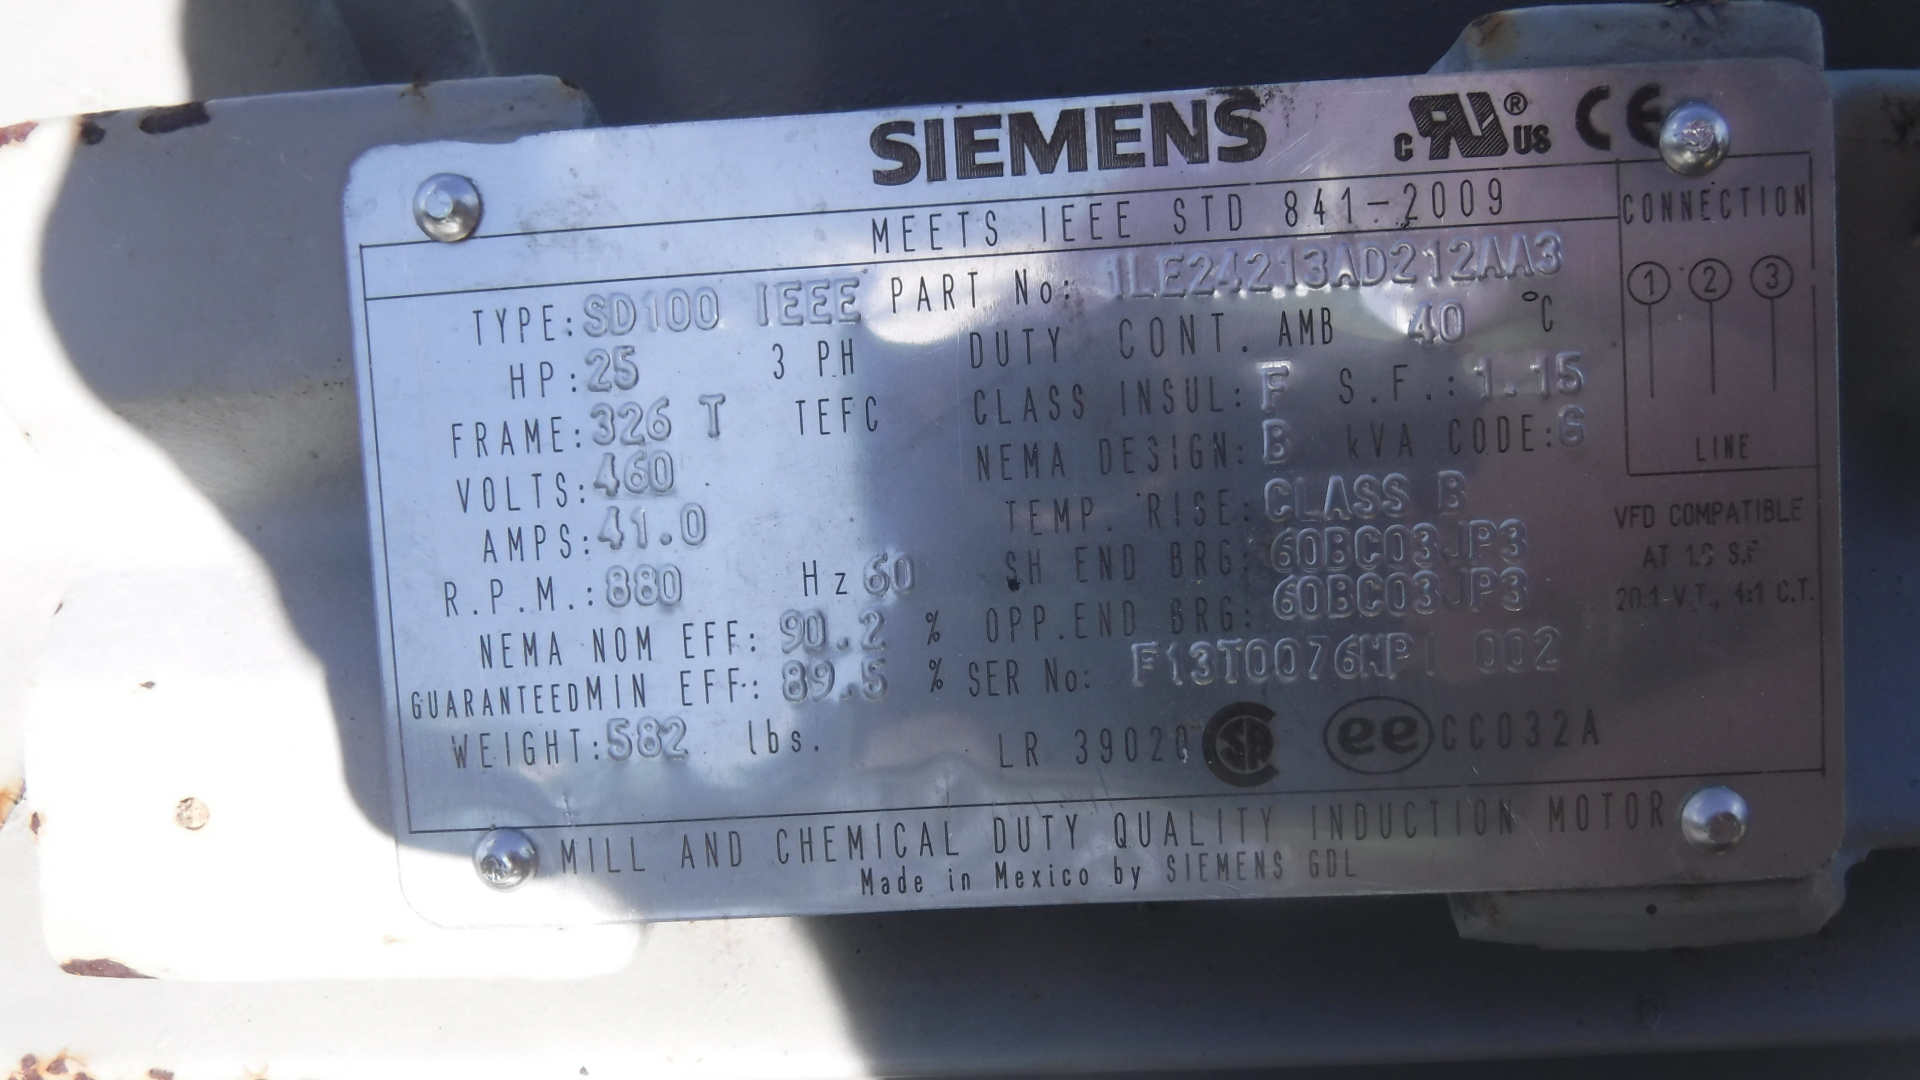 Siemens 25 HP 900 RPM 326T Squirrel Cage Motors 83216